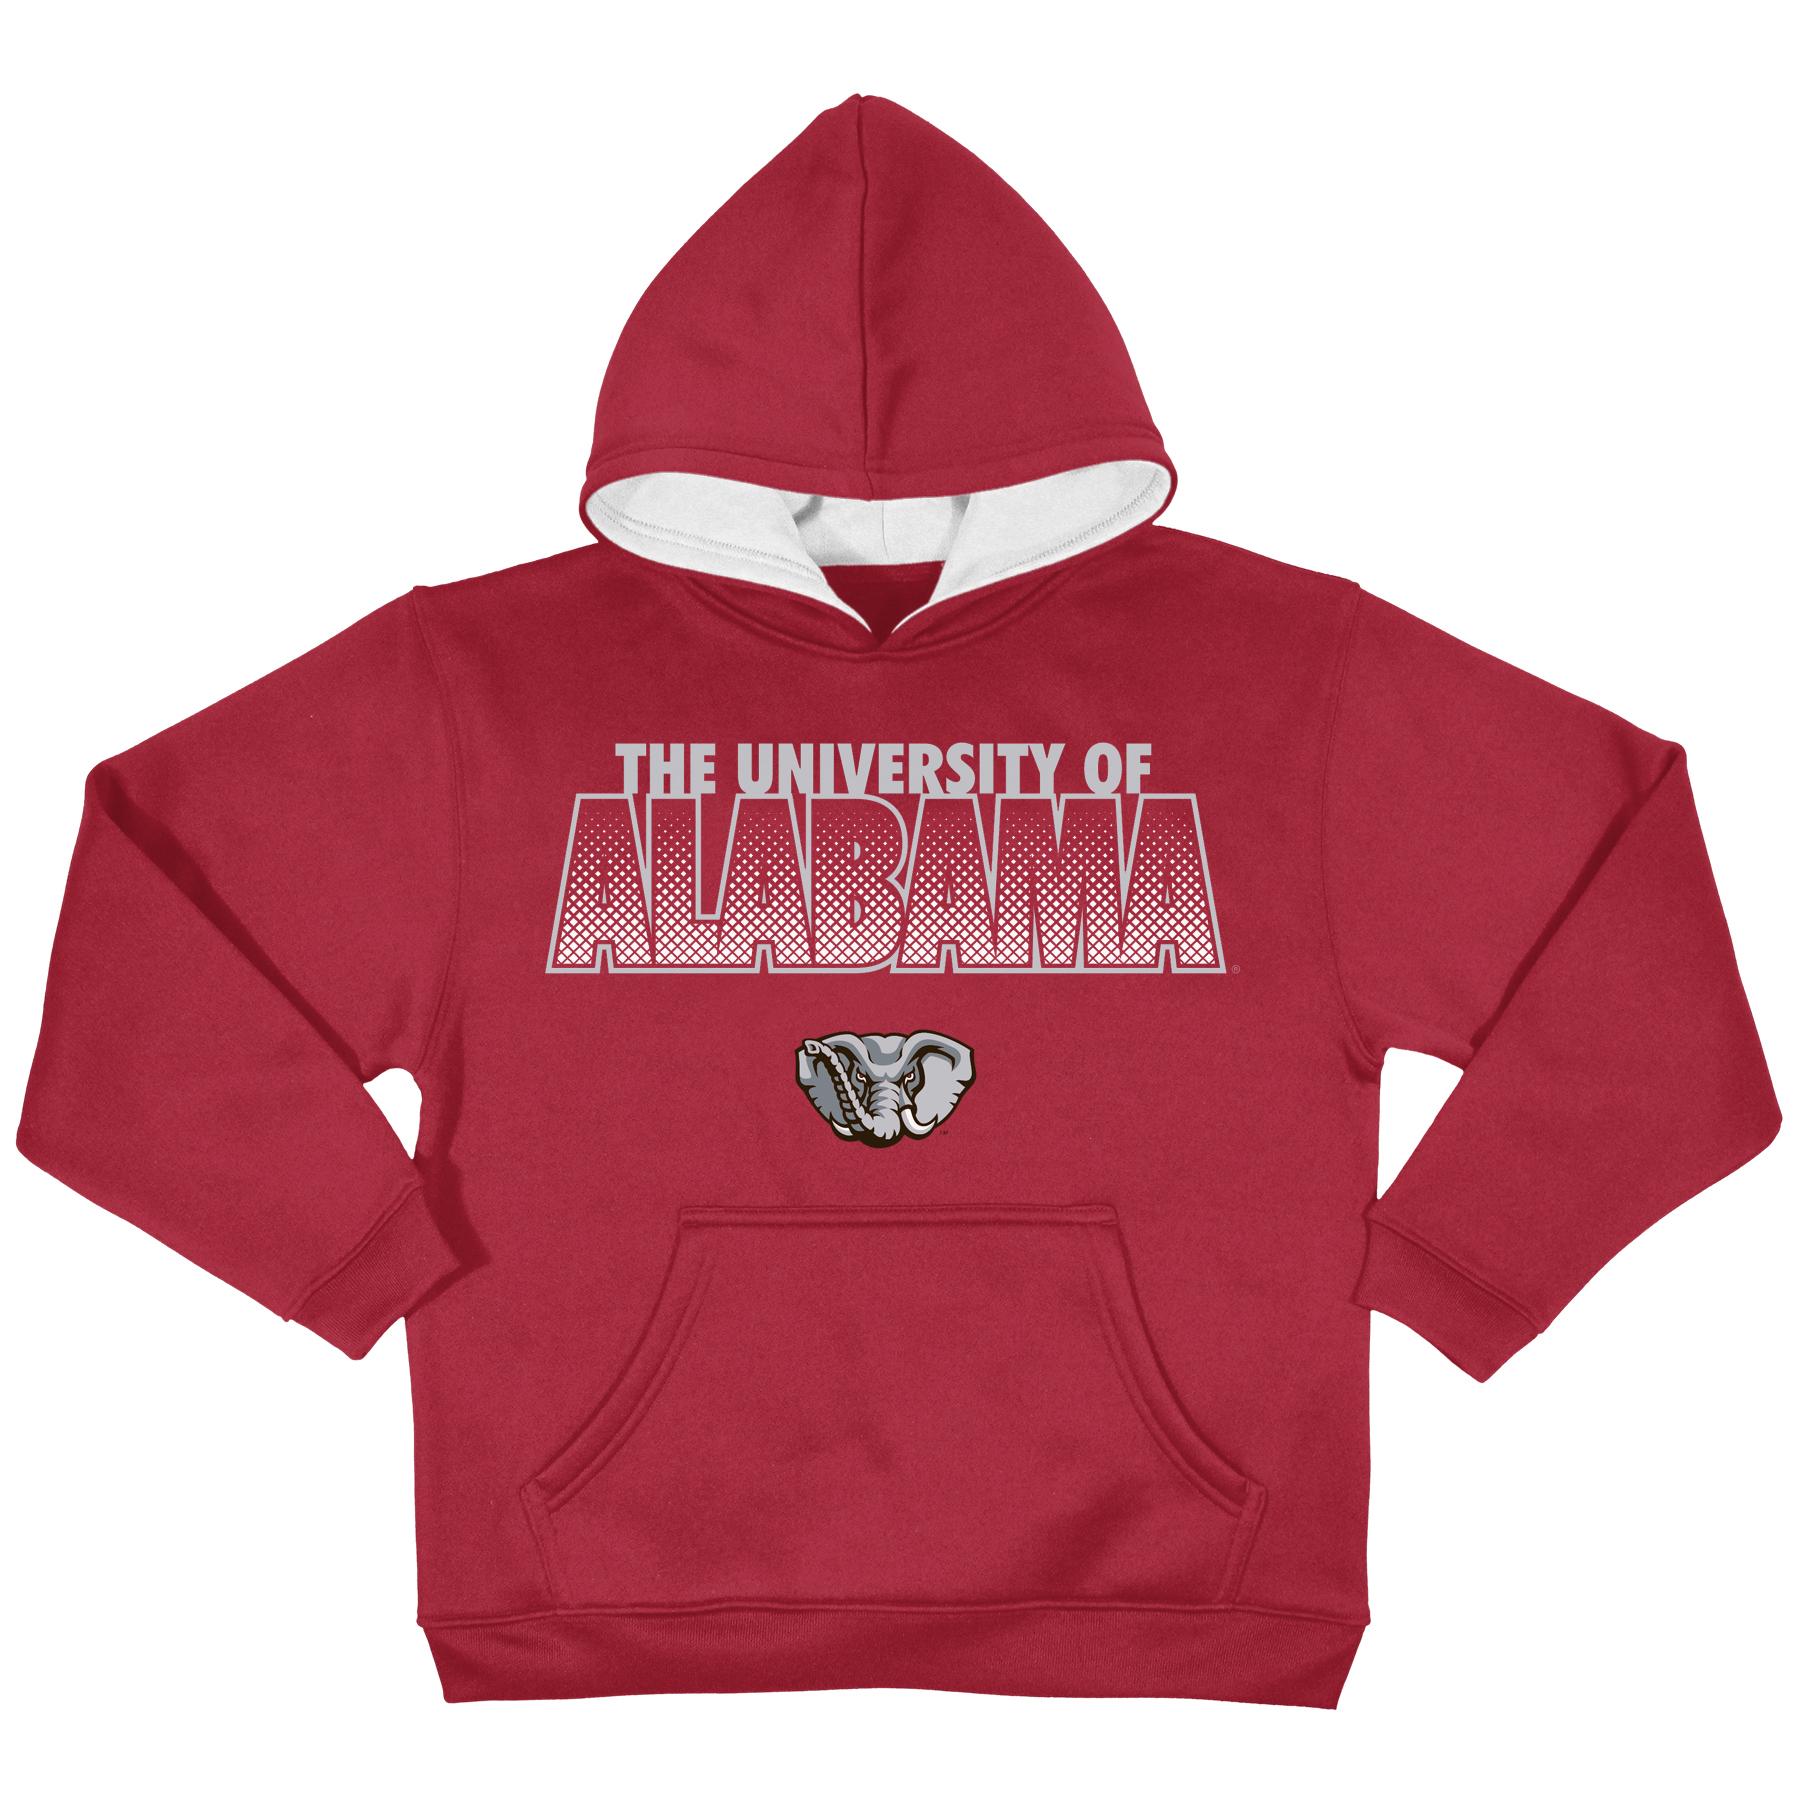 NCAA Boys' Hooded Sweatshirt - University of Alabama Crimson Tide